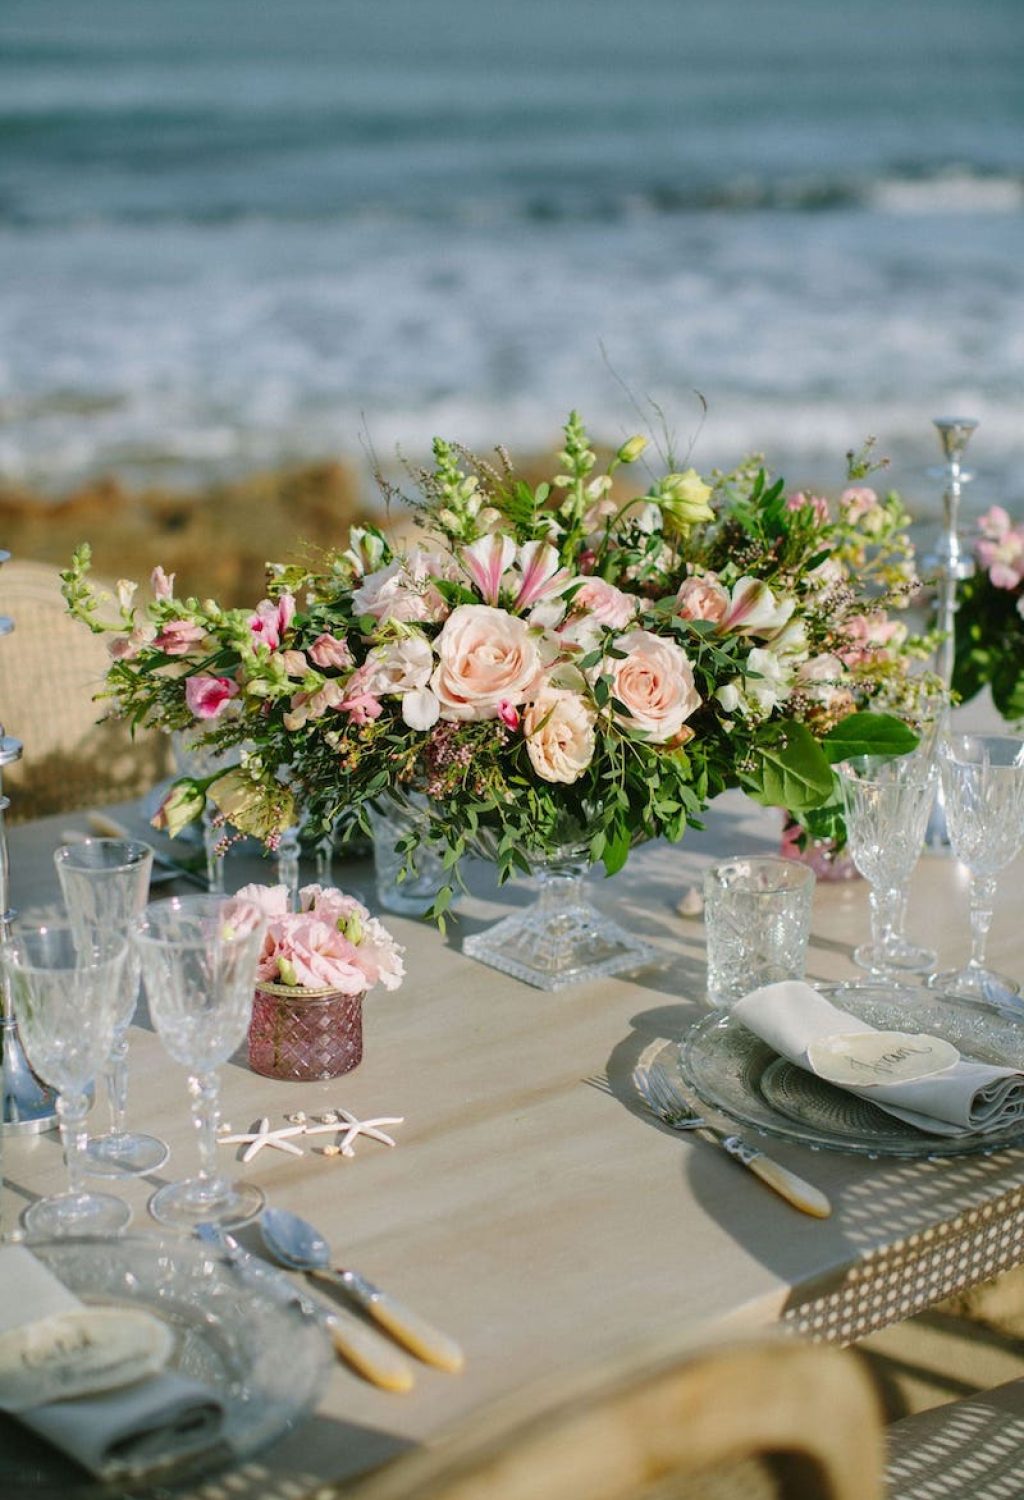 decoración de mesas para bodas con flores y vajilla en Mallorca